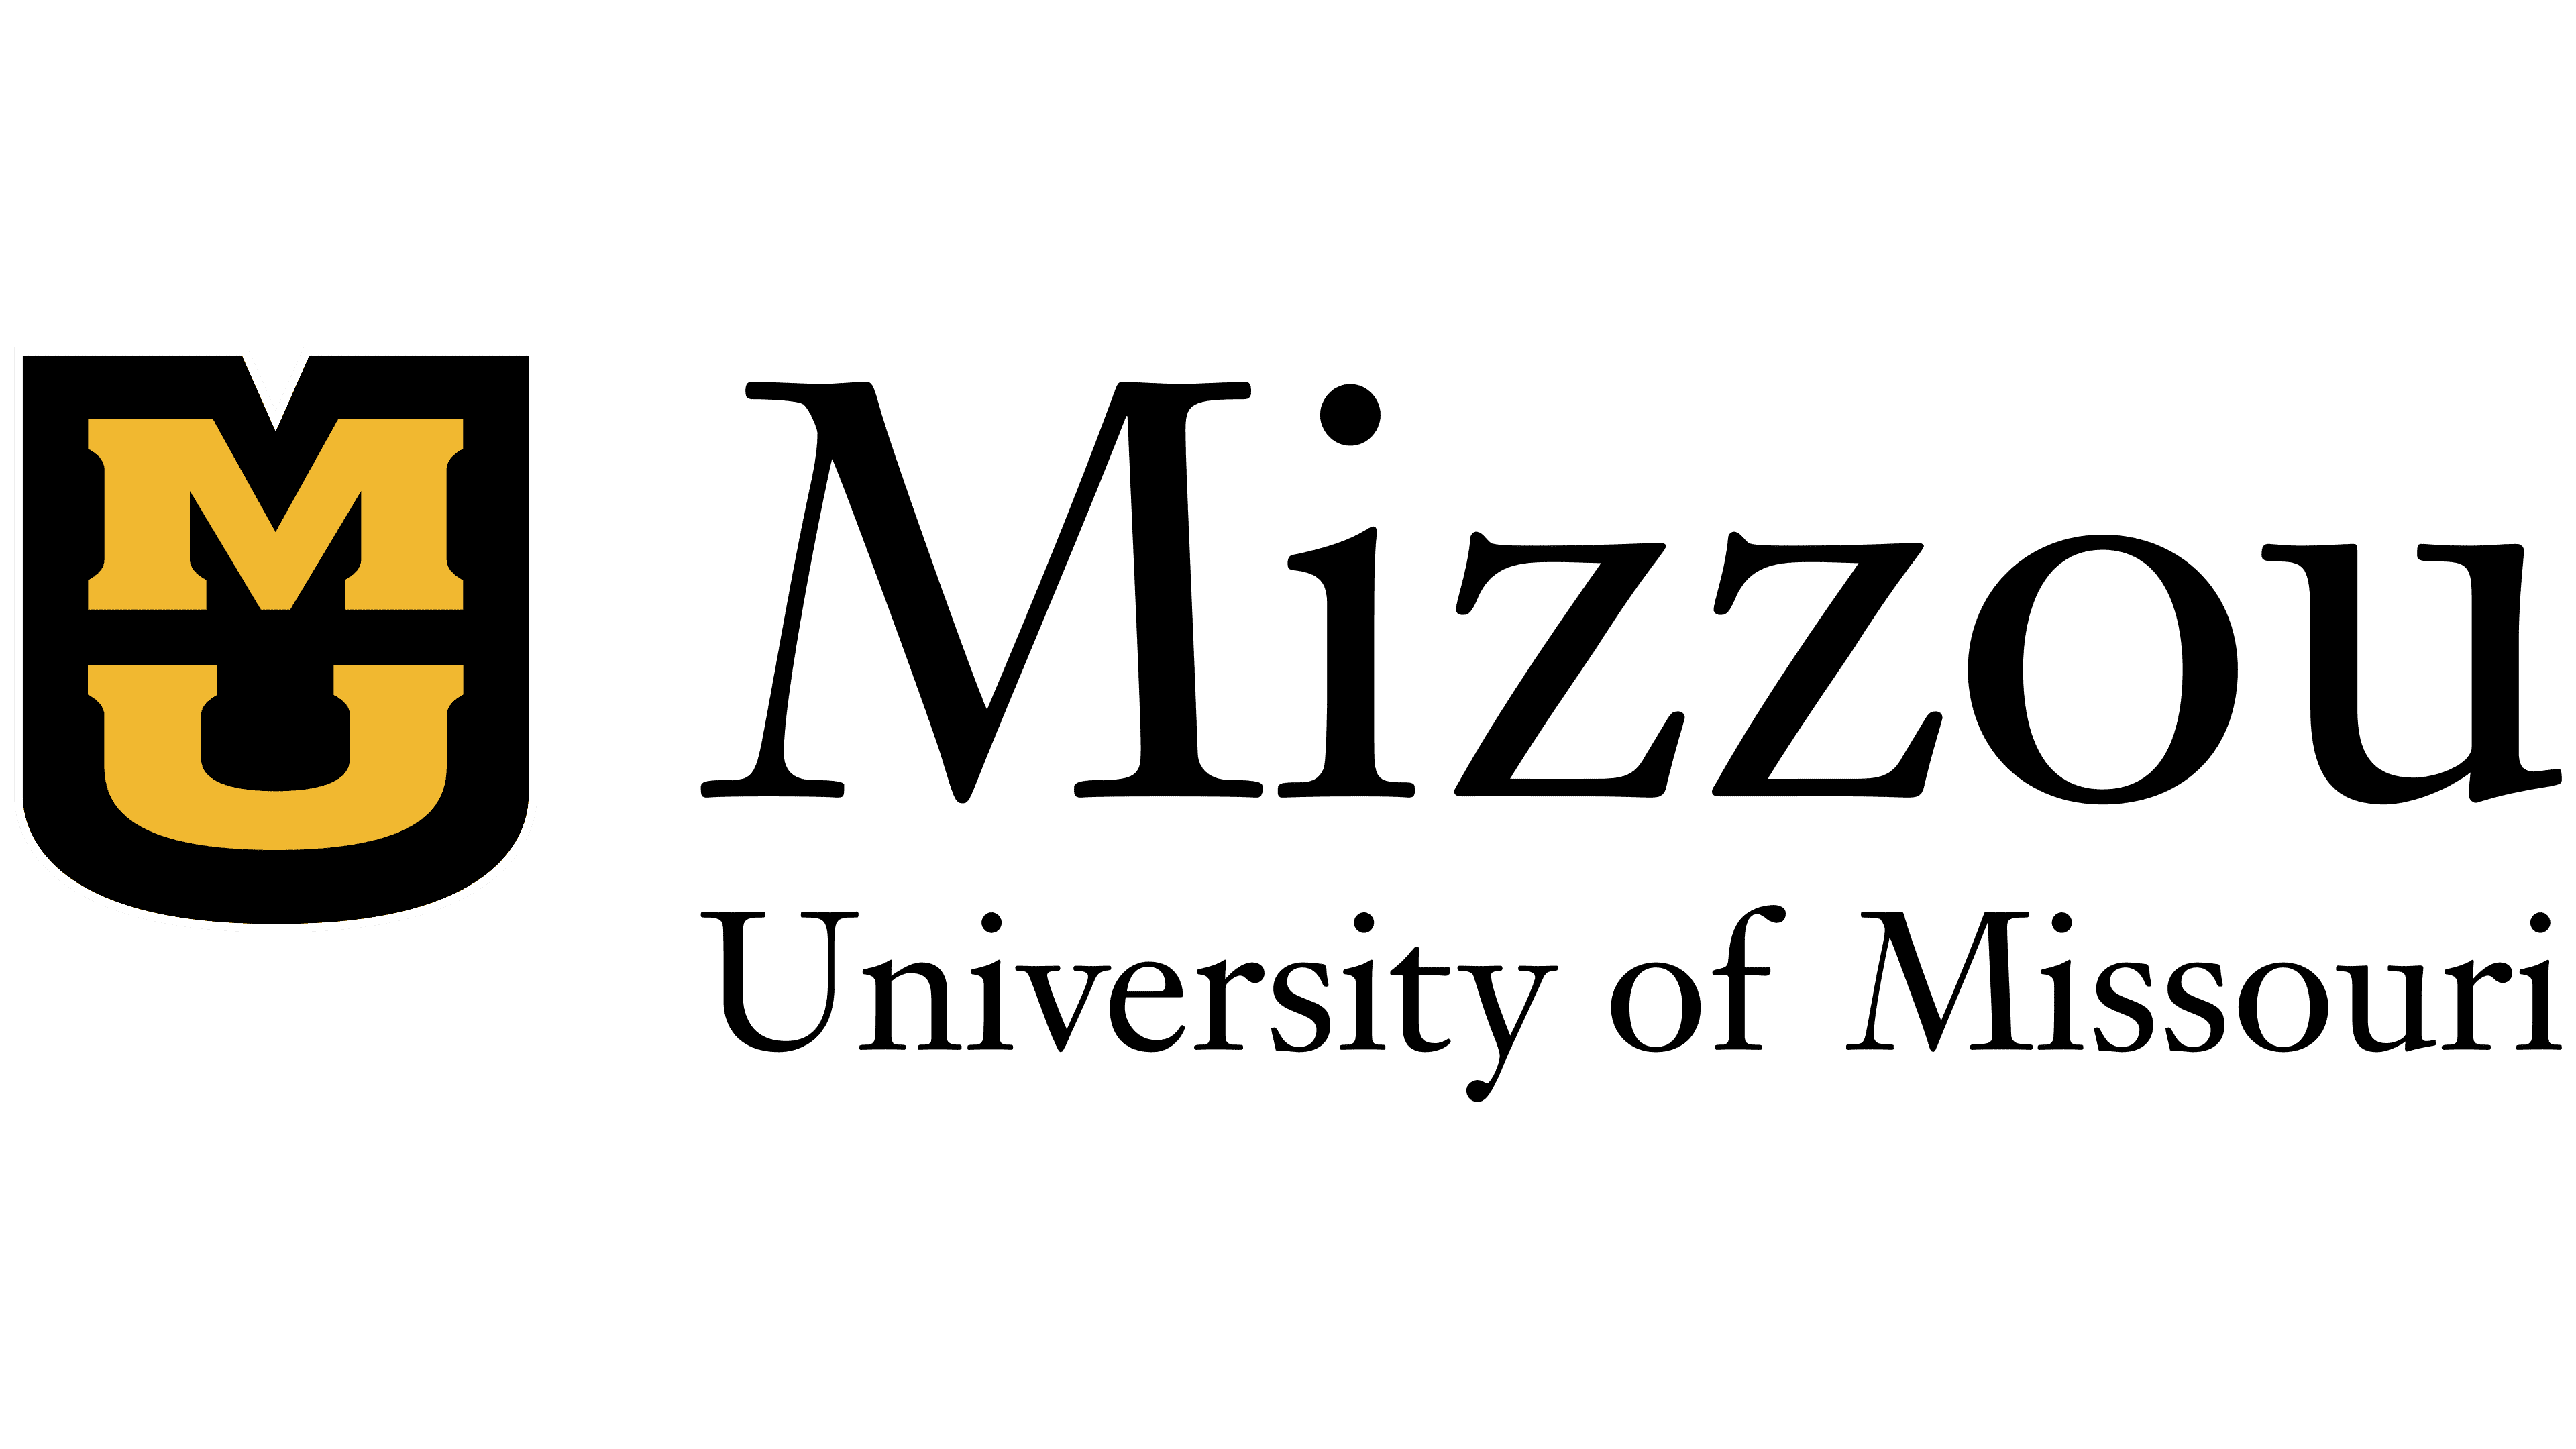 University of Missouri (MU) Director